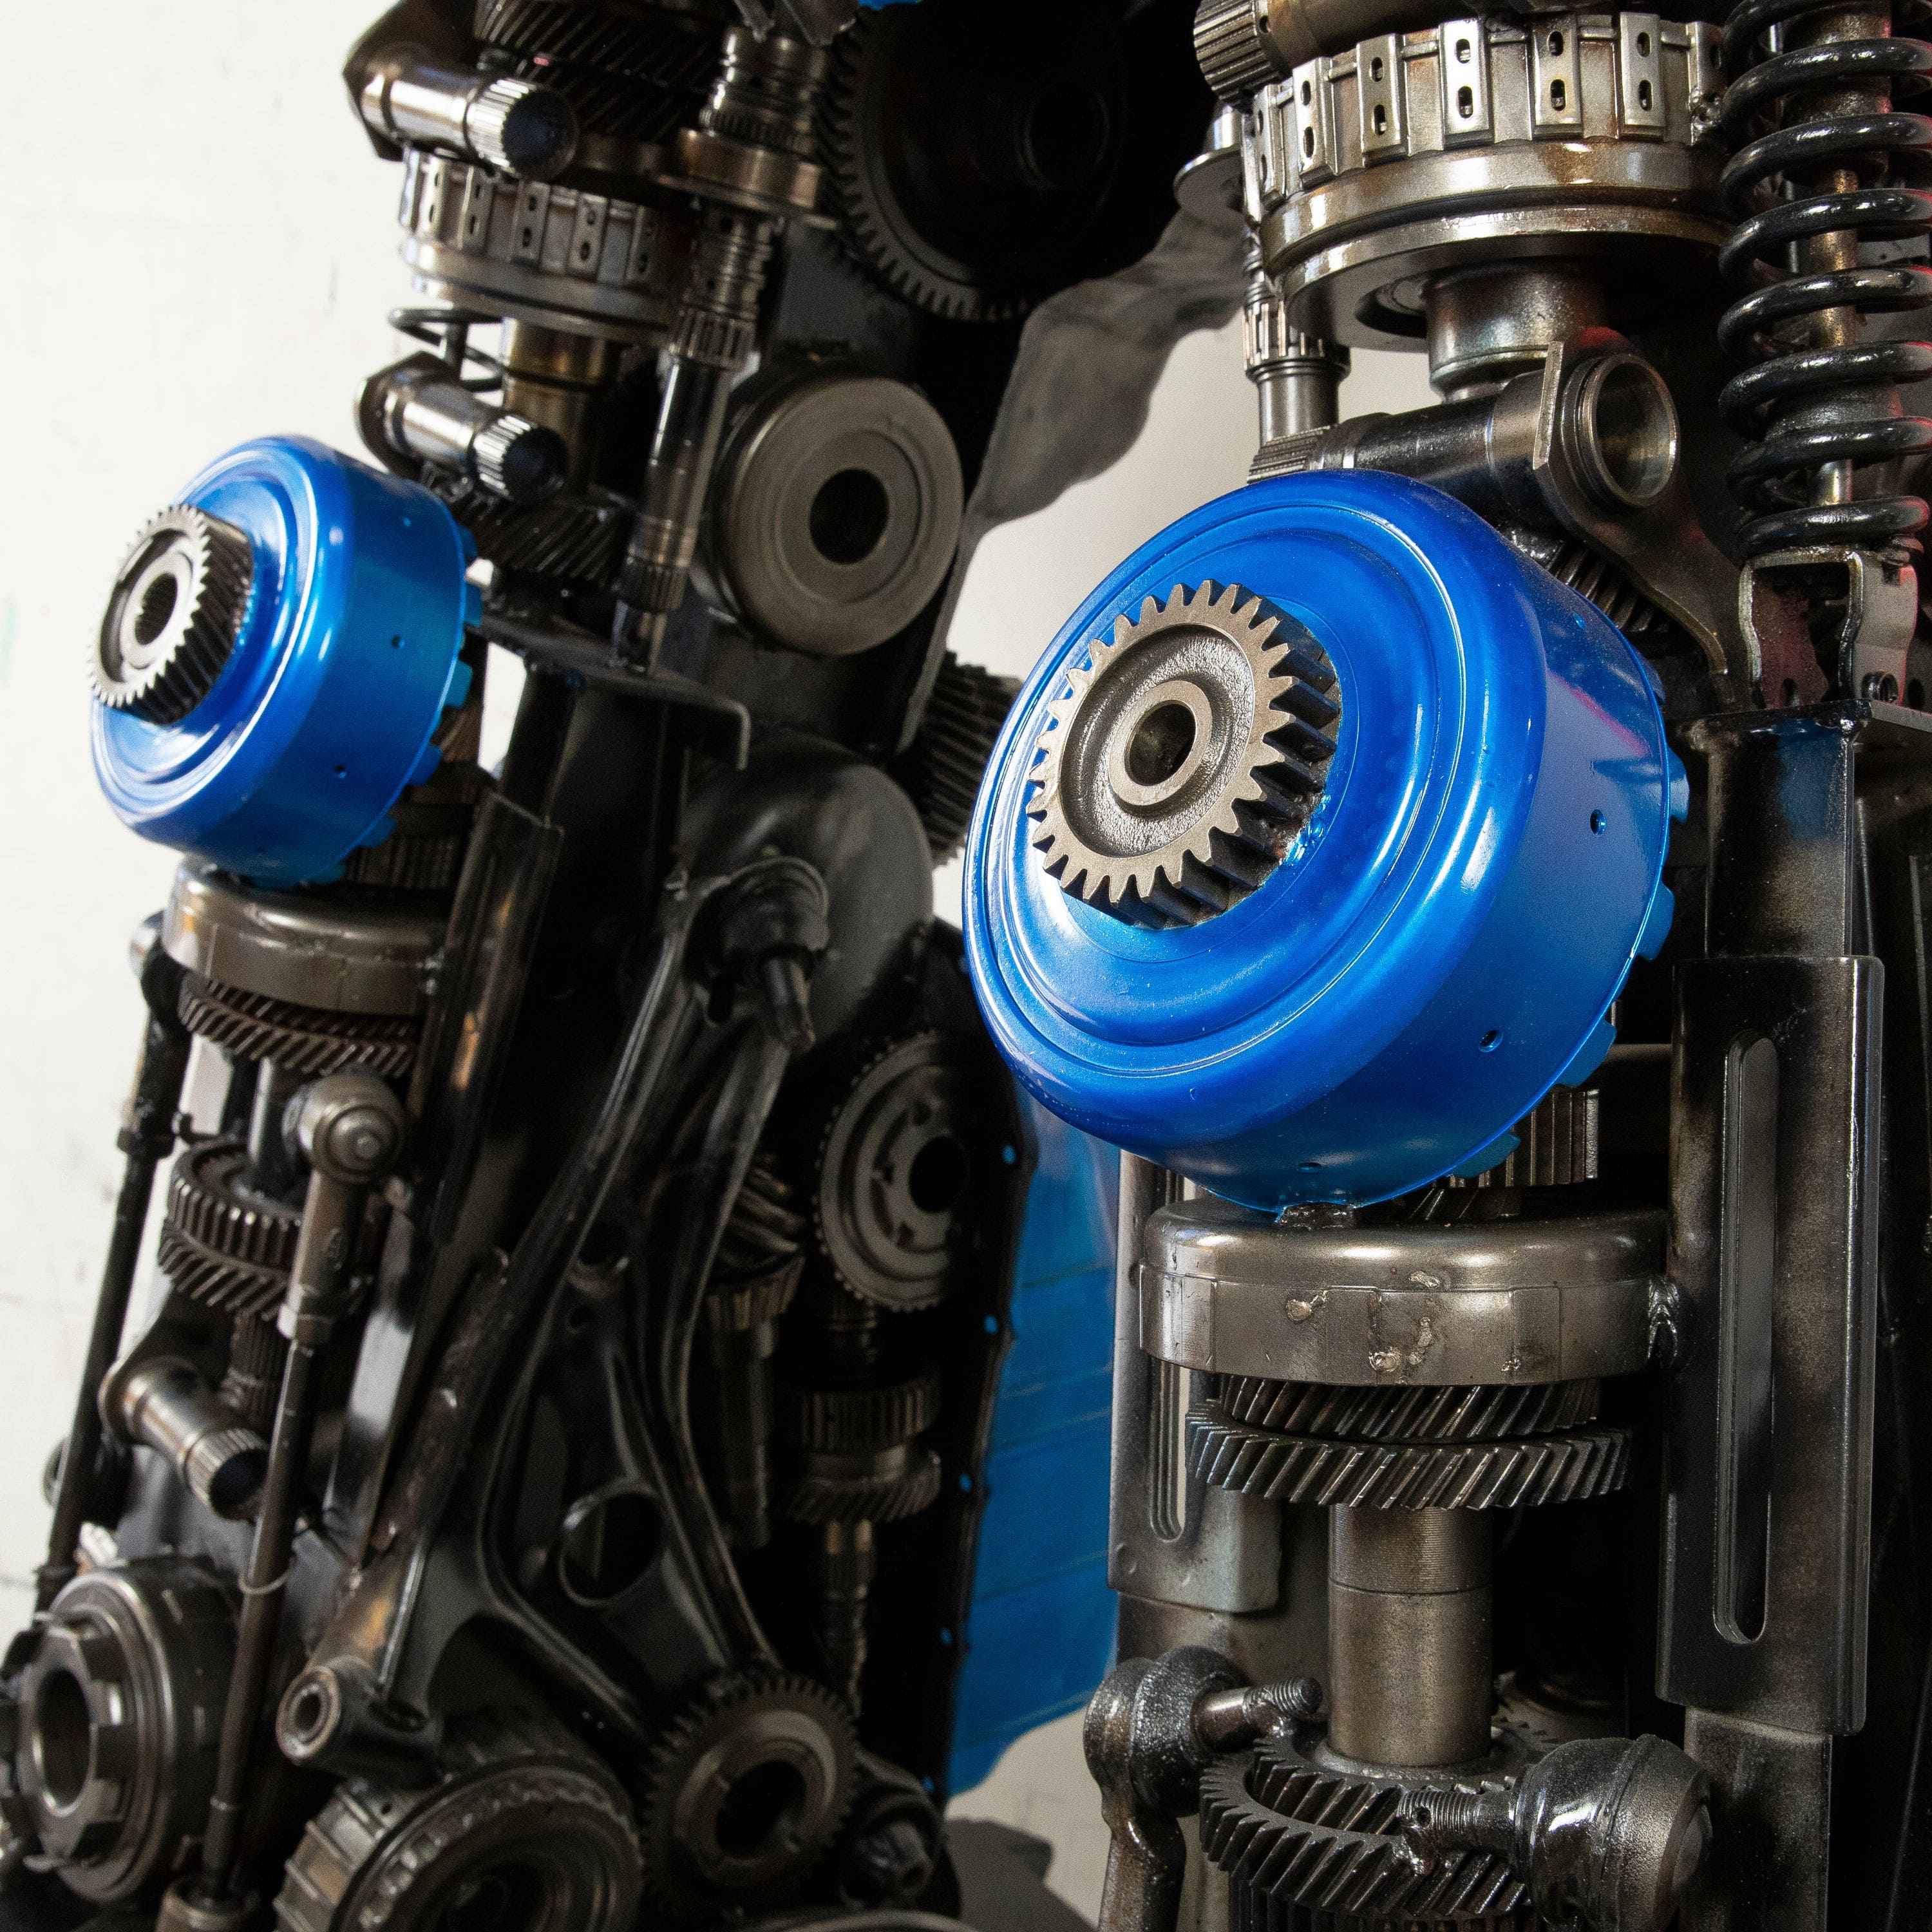 Kalifano Recycled Metal Art 91" Optimus Prime Inspired Recycled Metal Art Sculpture RMS-OP230-S24